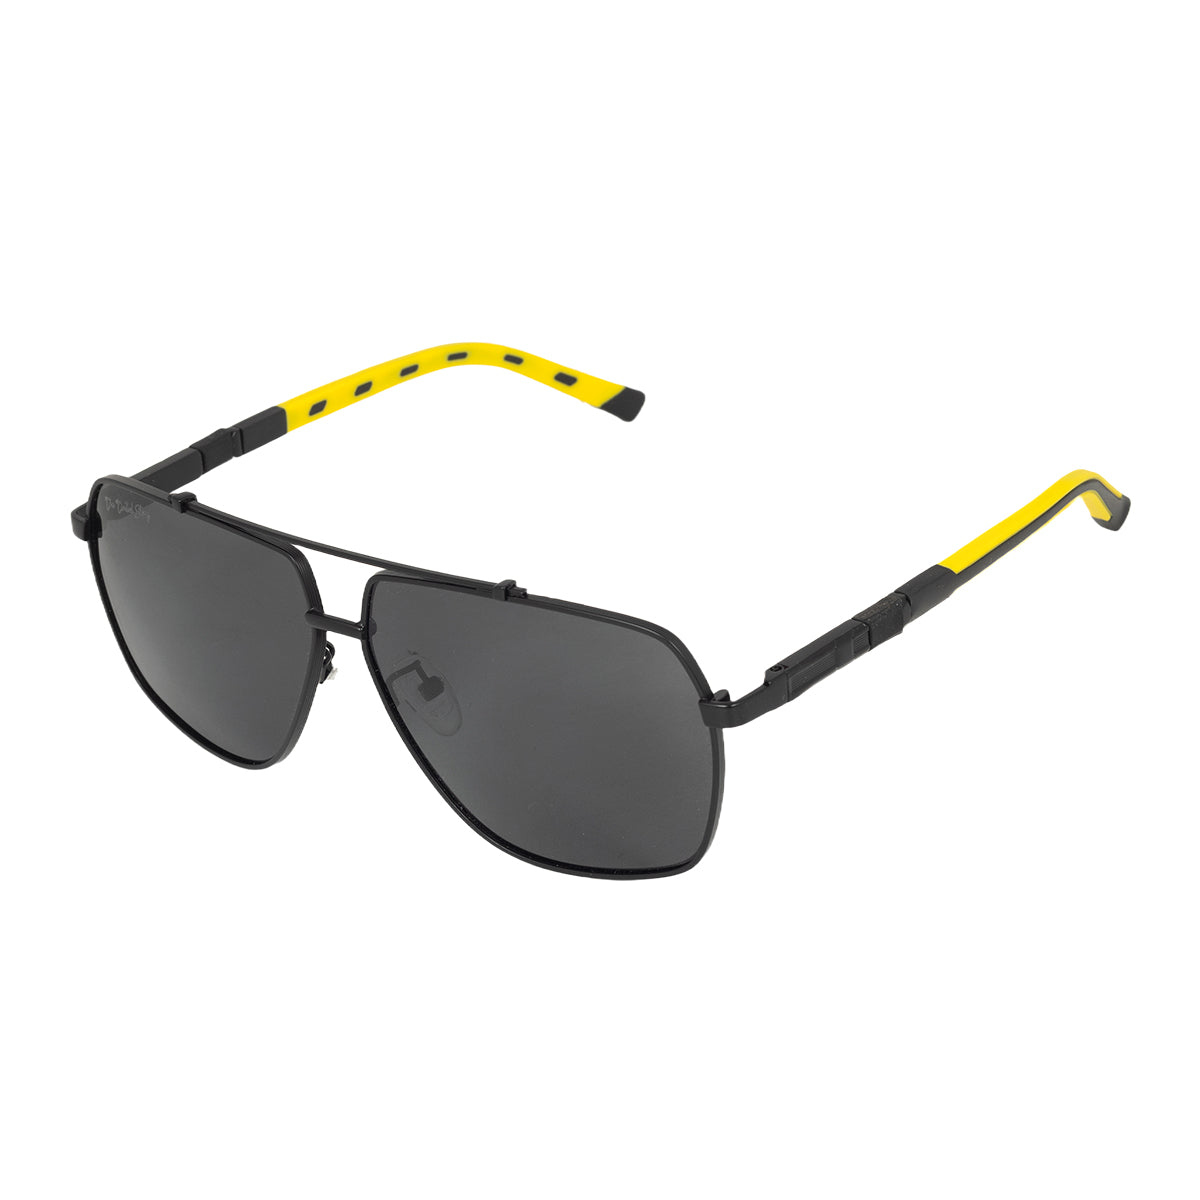 Edgar Aviator Sunglasses